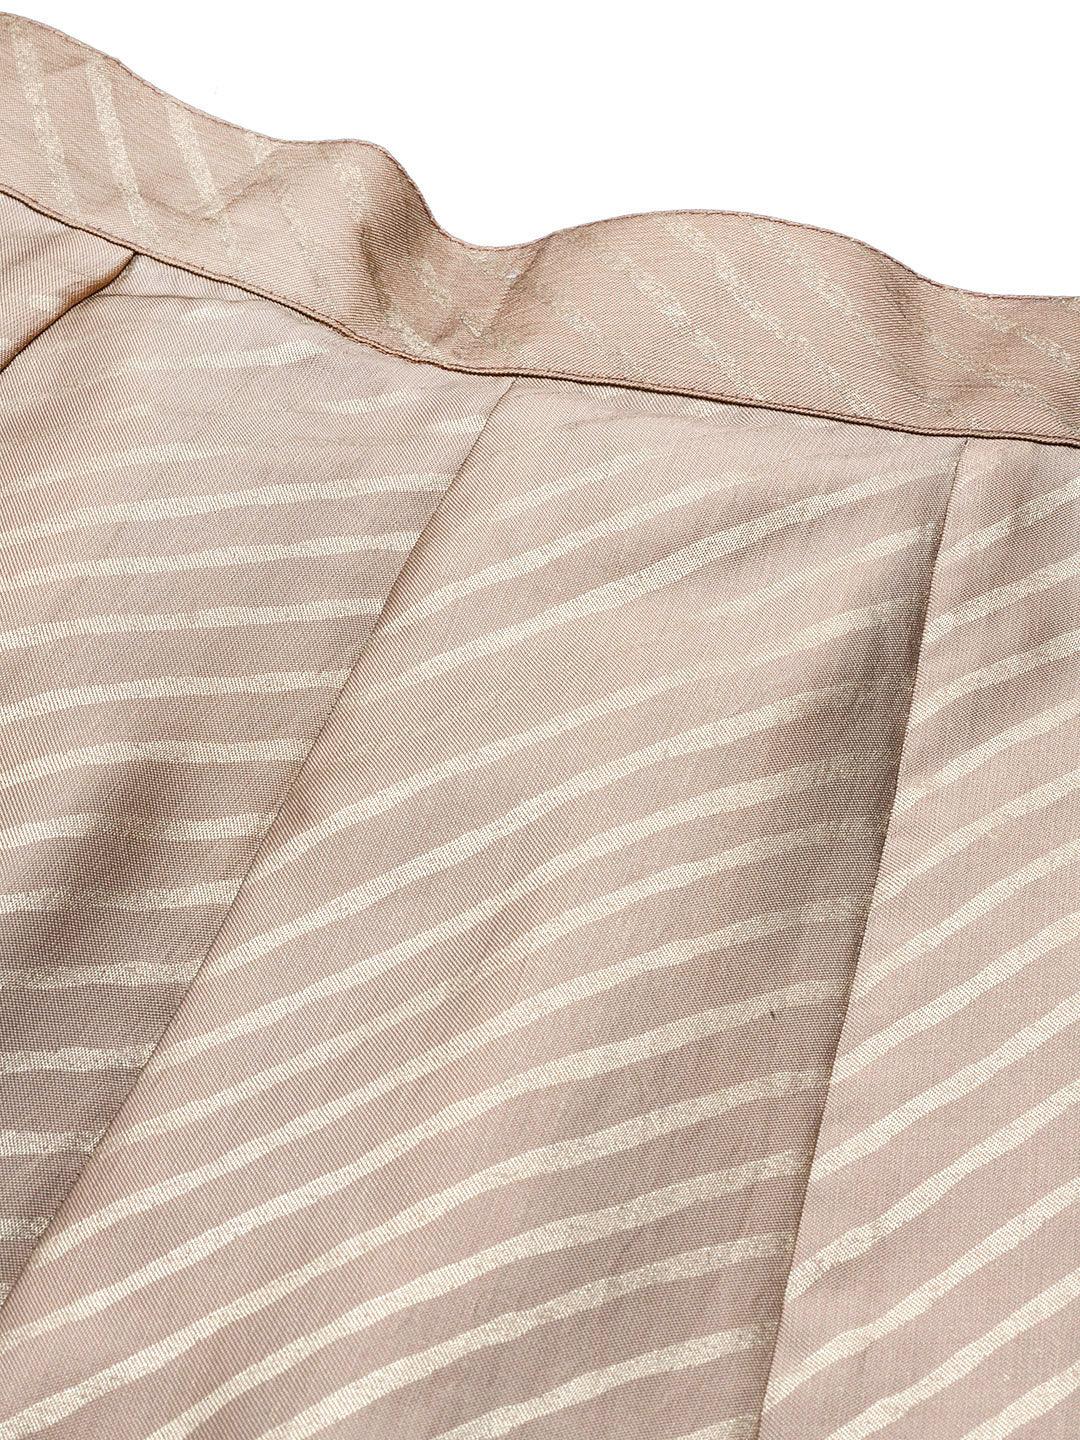 Brown Printed Silk Blend Skirt